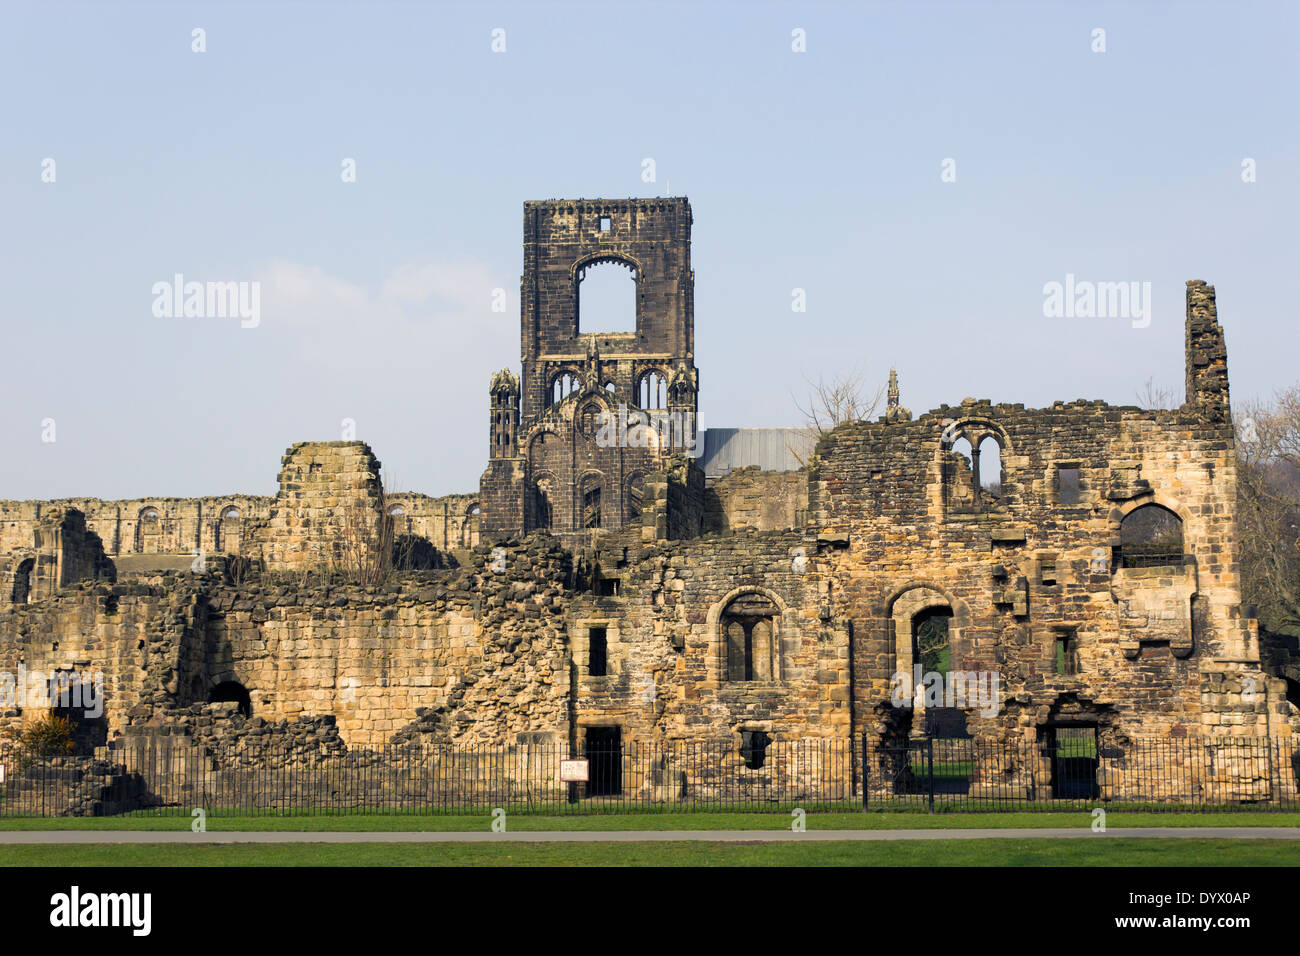 Kirkstall Abbey, Kirkstall , Leeds, West Yorkshire, Inglaterra. Un monasterio cisterciense en ruinas del siglo 12. Foto de stock